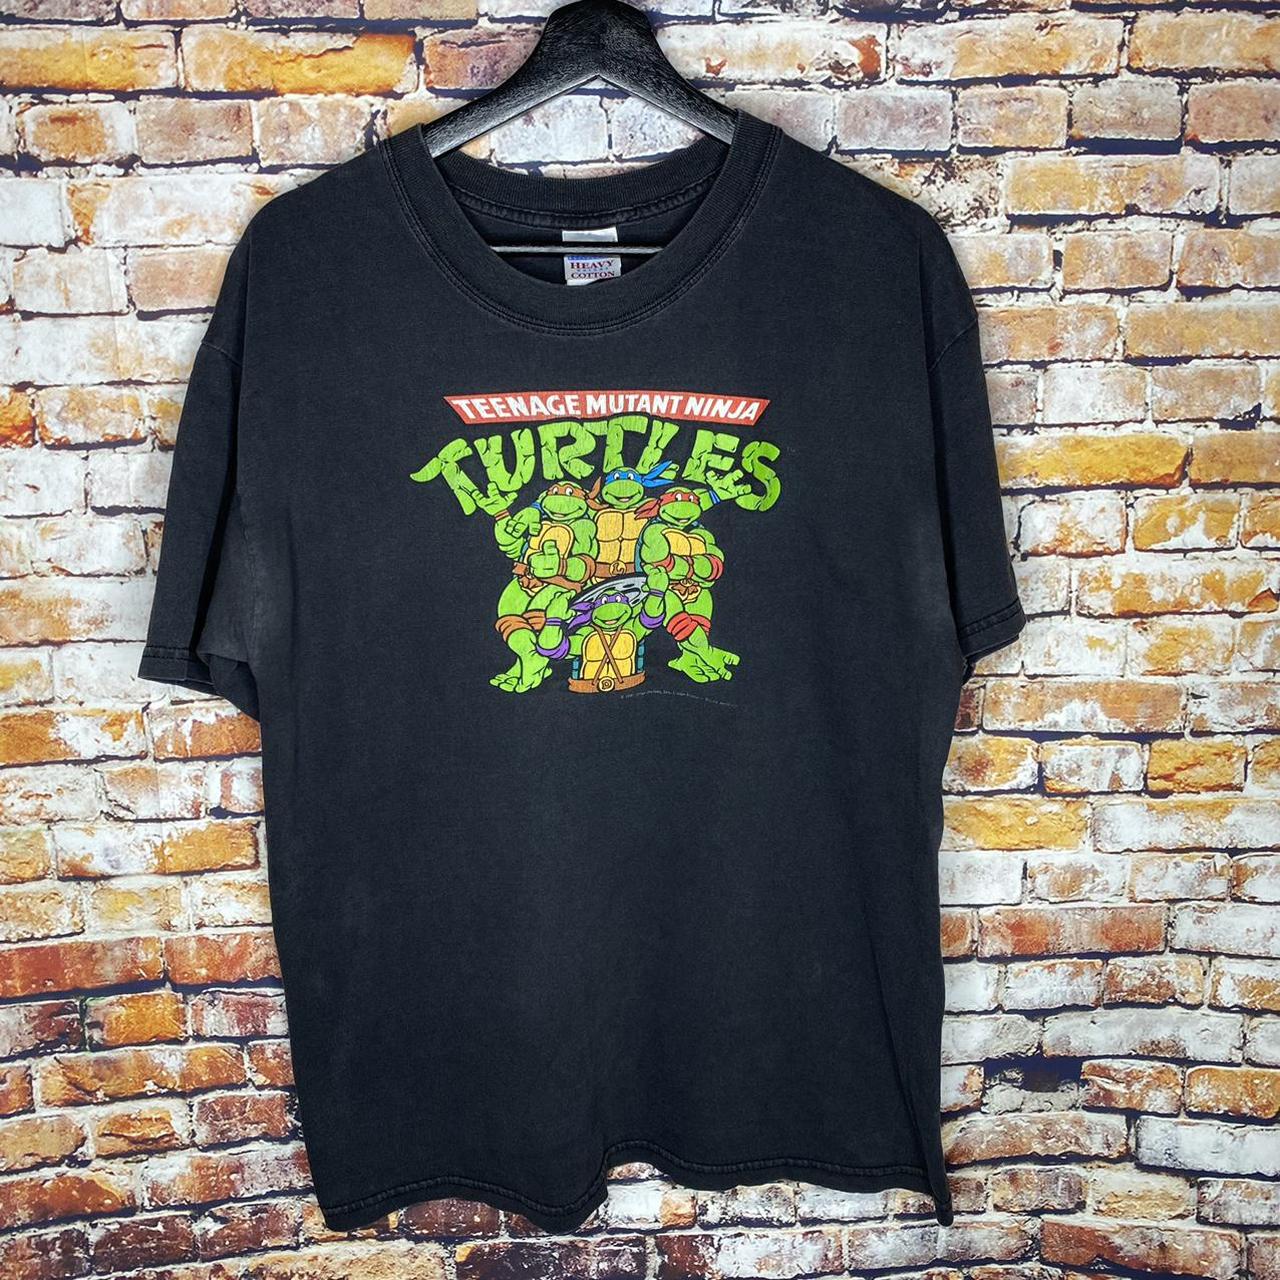 Men's Teenage Mutant Ninja Turtles Graphic Tee, Size: Large, Dark Grey